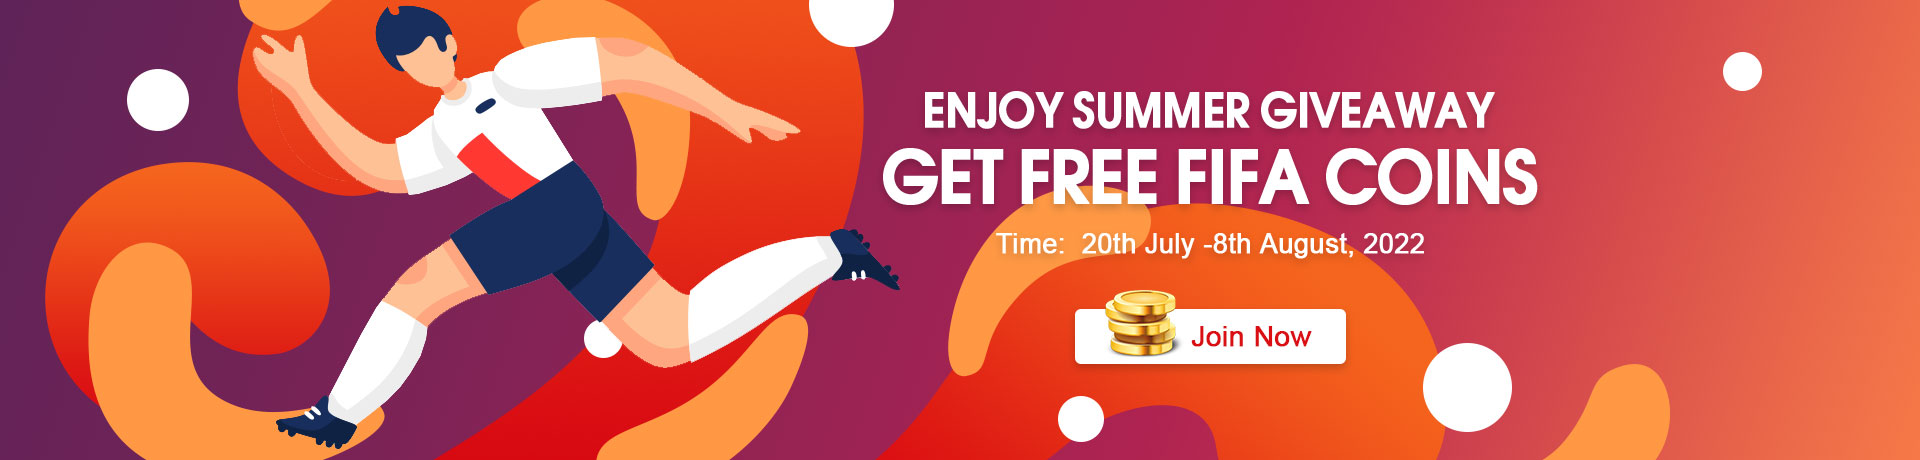 Enjoy Summer Giveaway, Get Free FIFA Coins